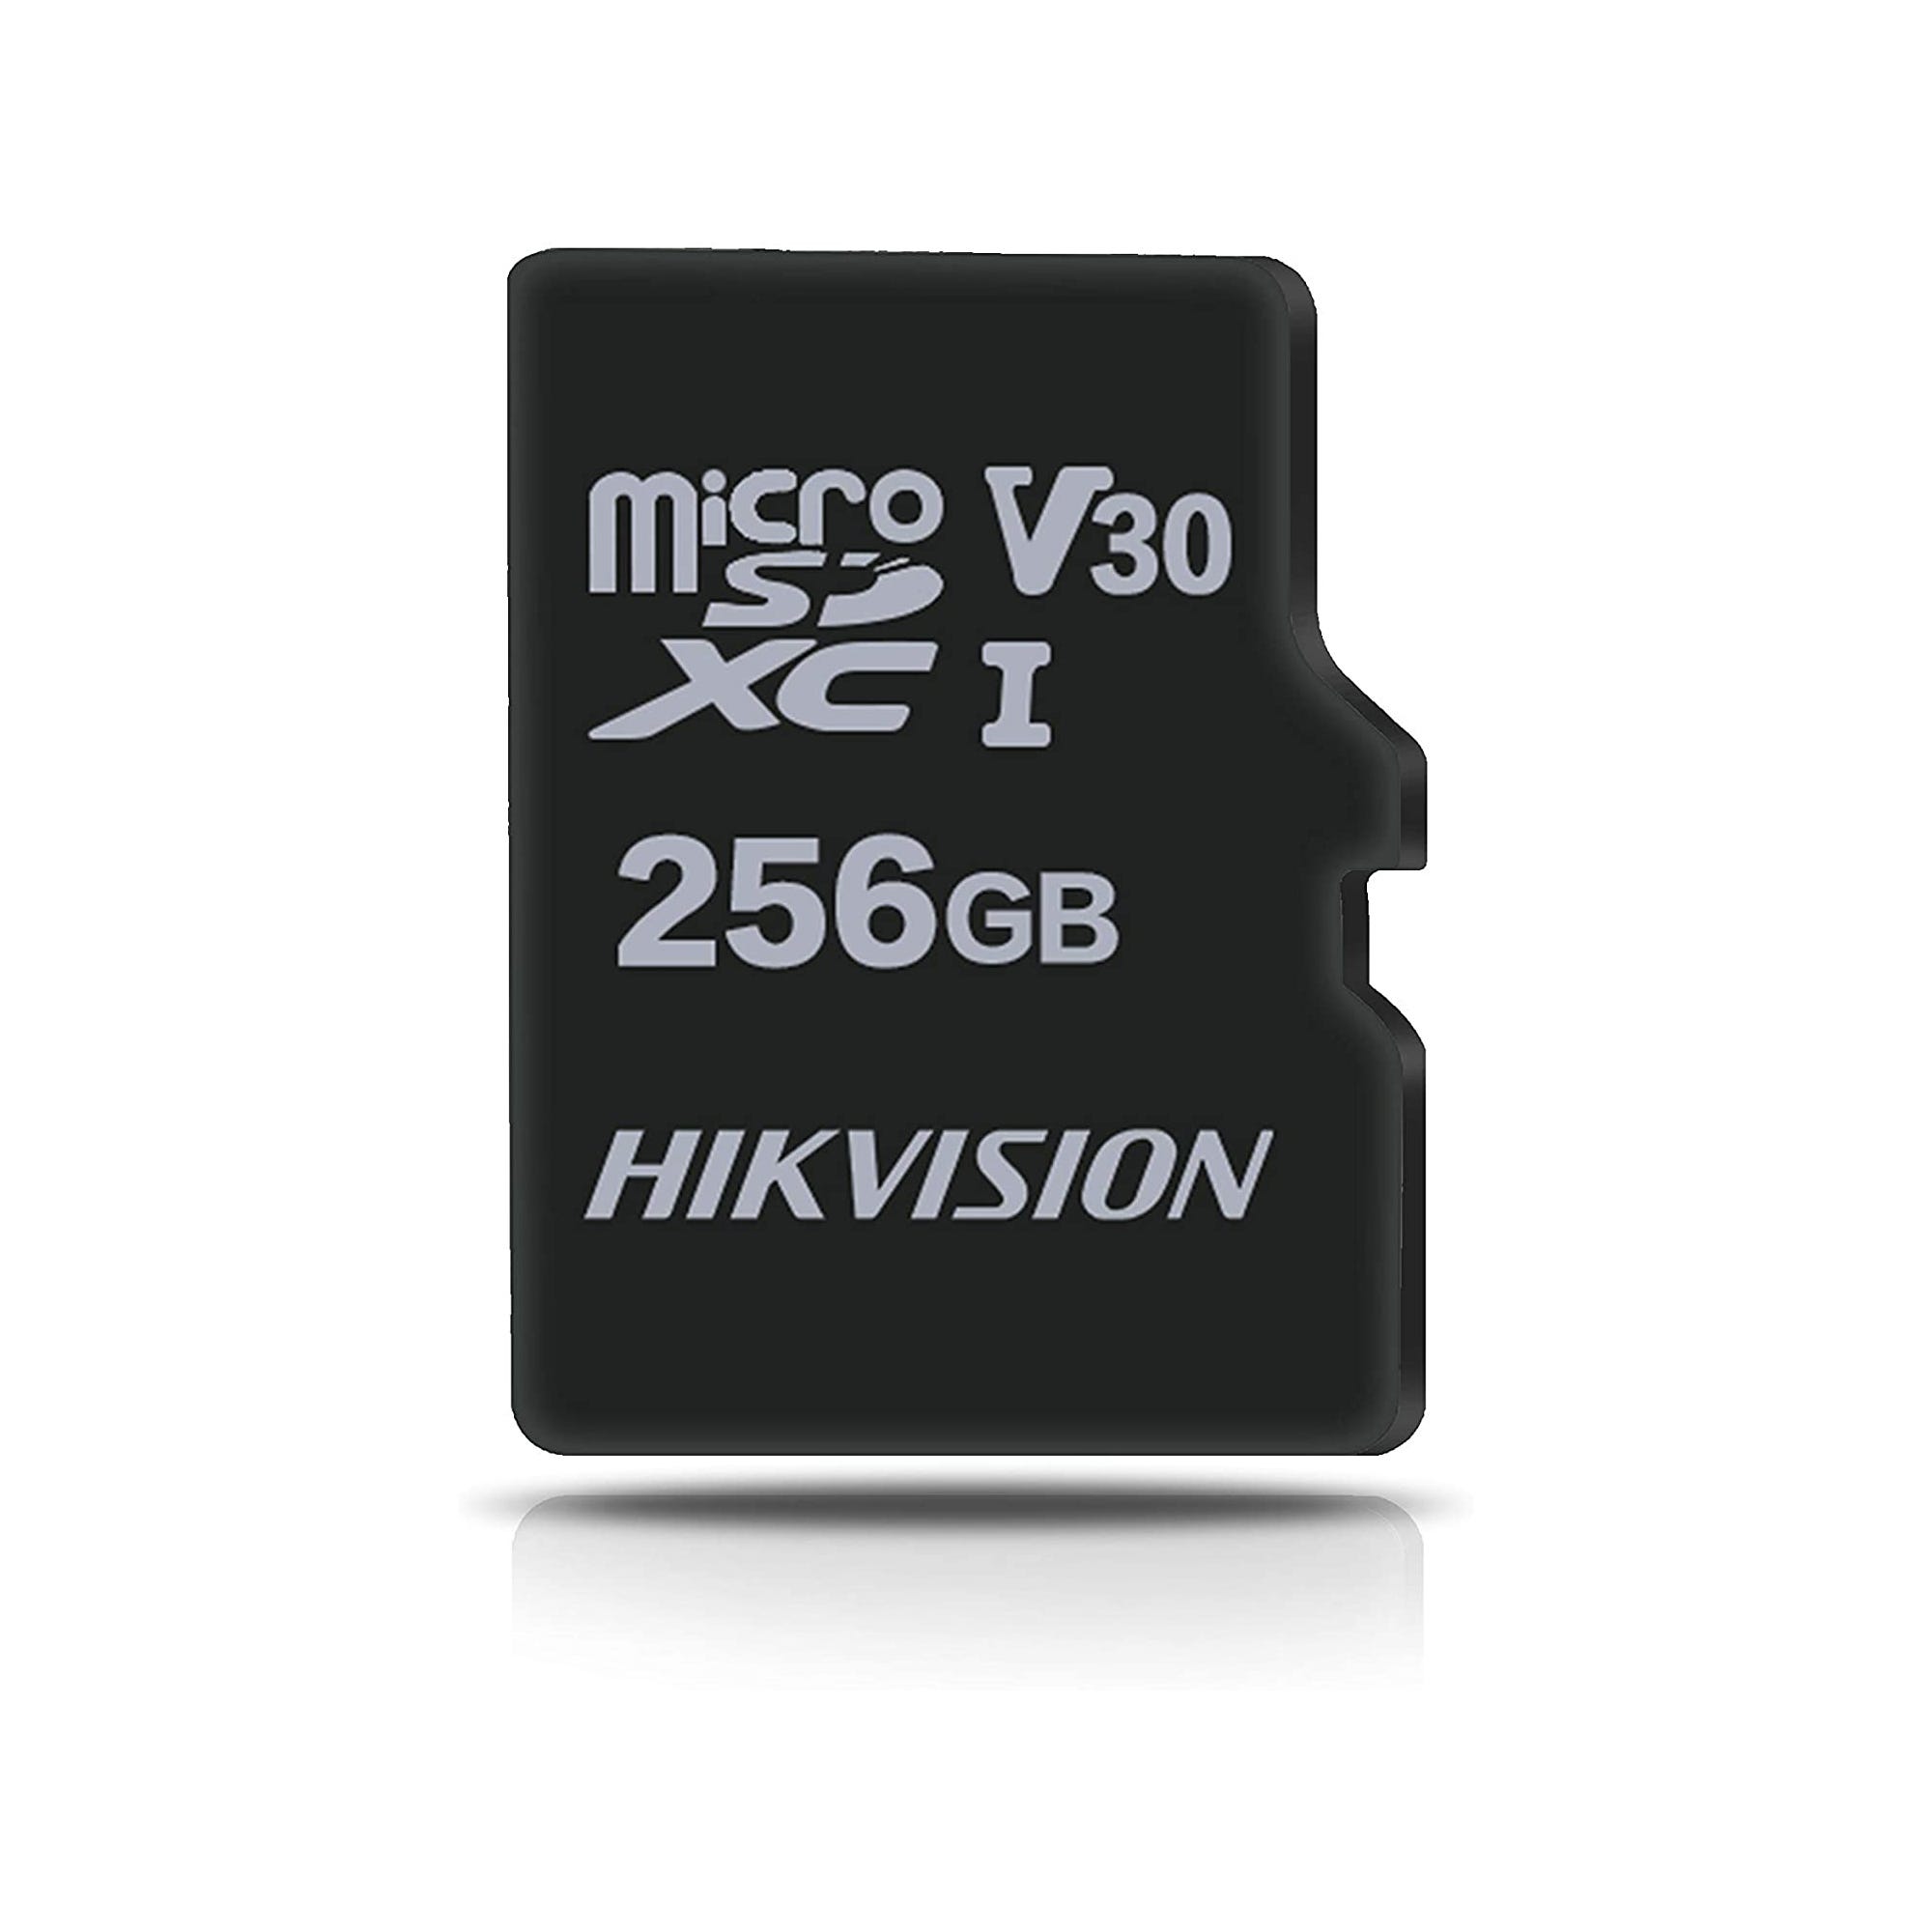 Carte MicroSD 128 Go HS-TF-M1STD-128G